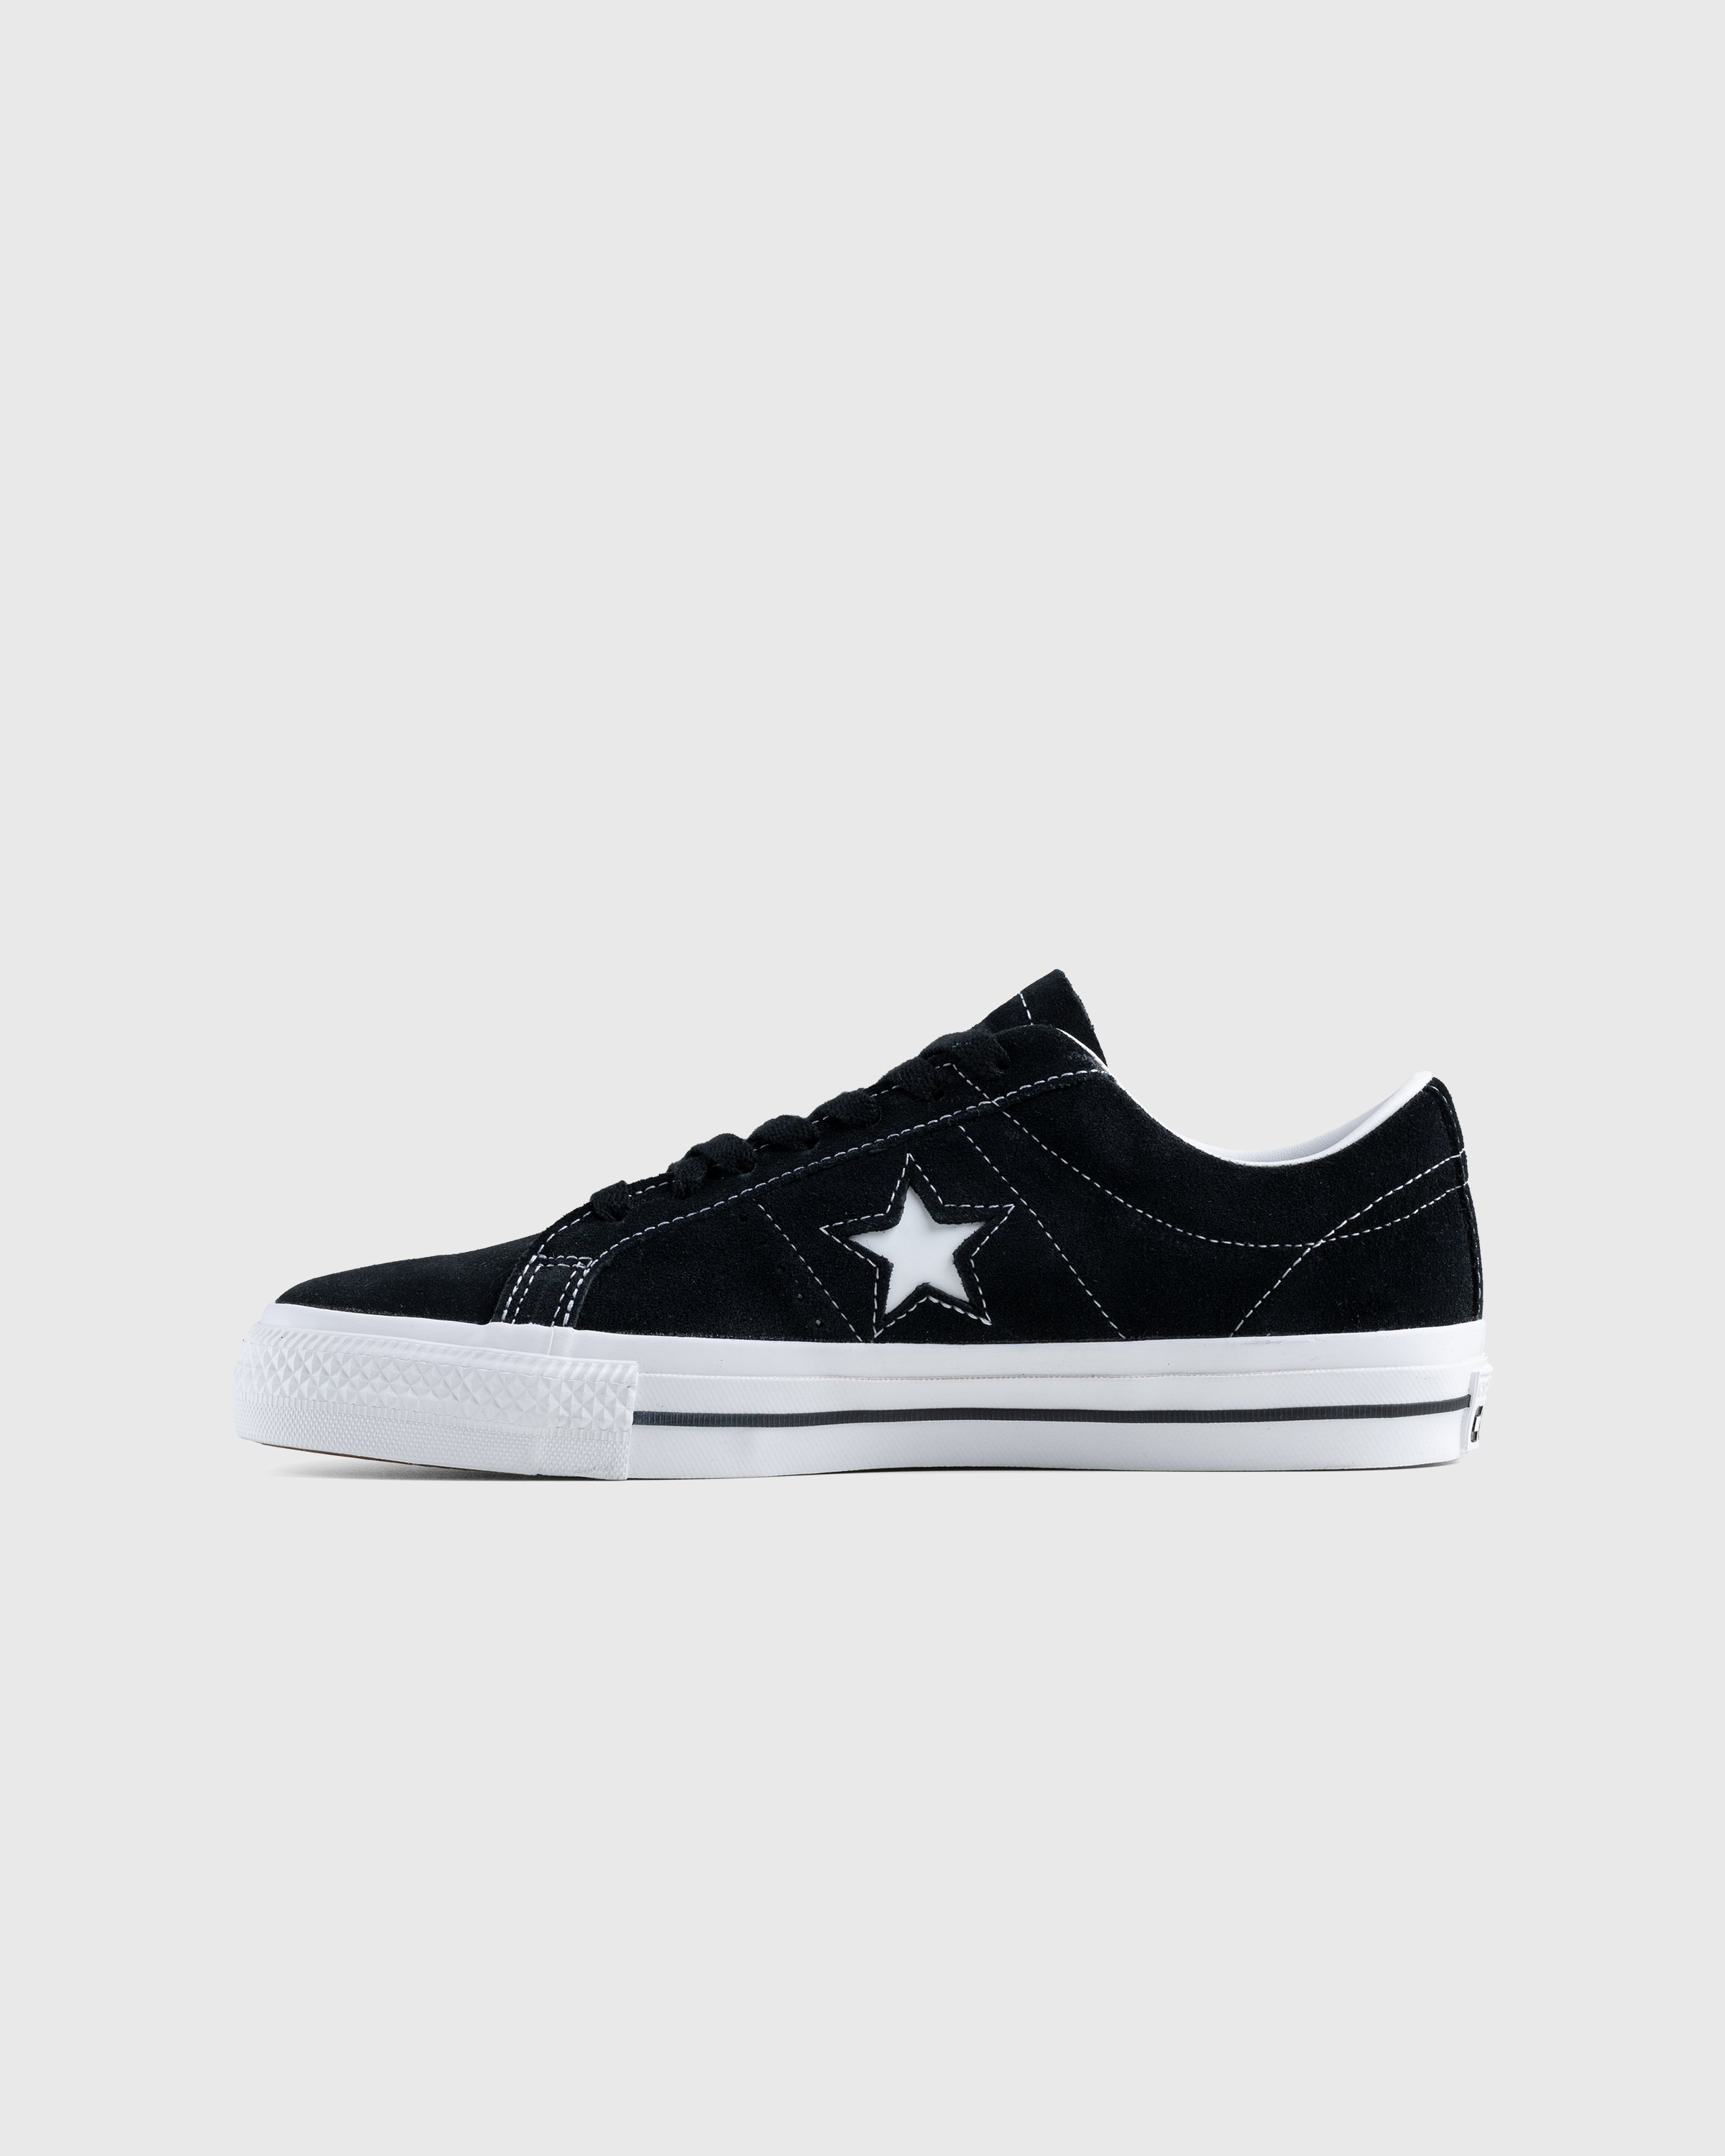 Converse - One Star Pro Black/White - Footwear - Black - Image 2